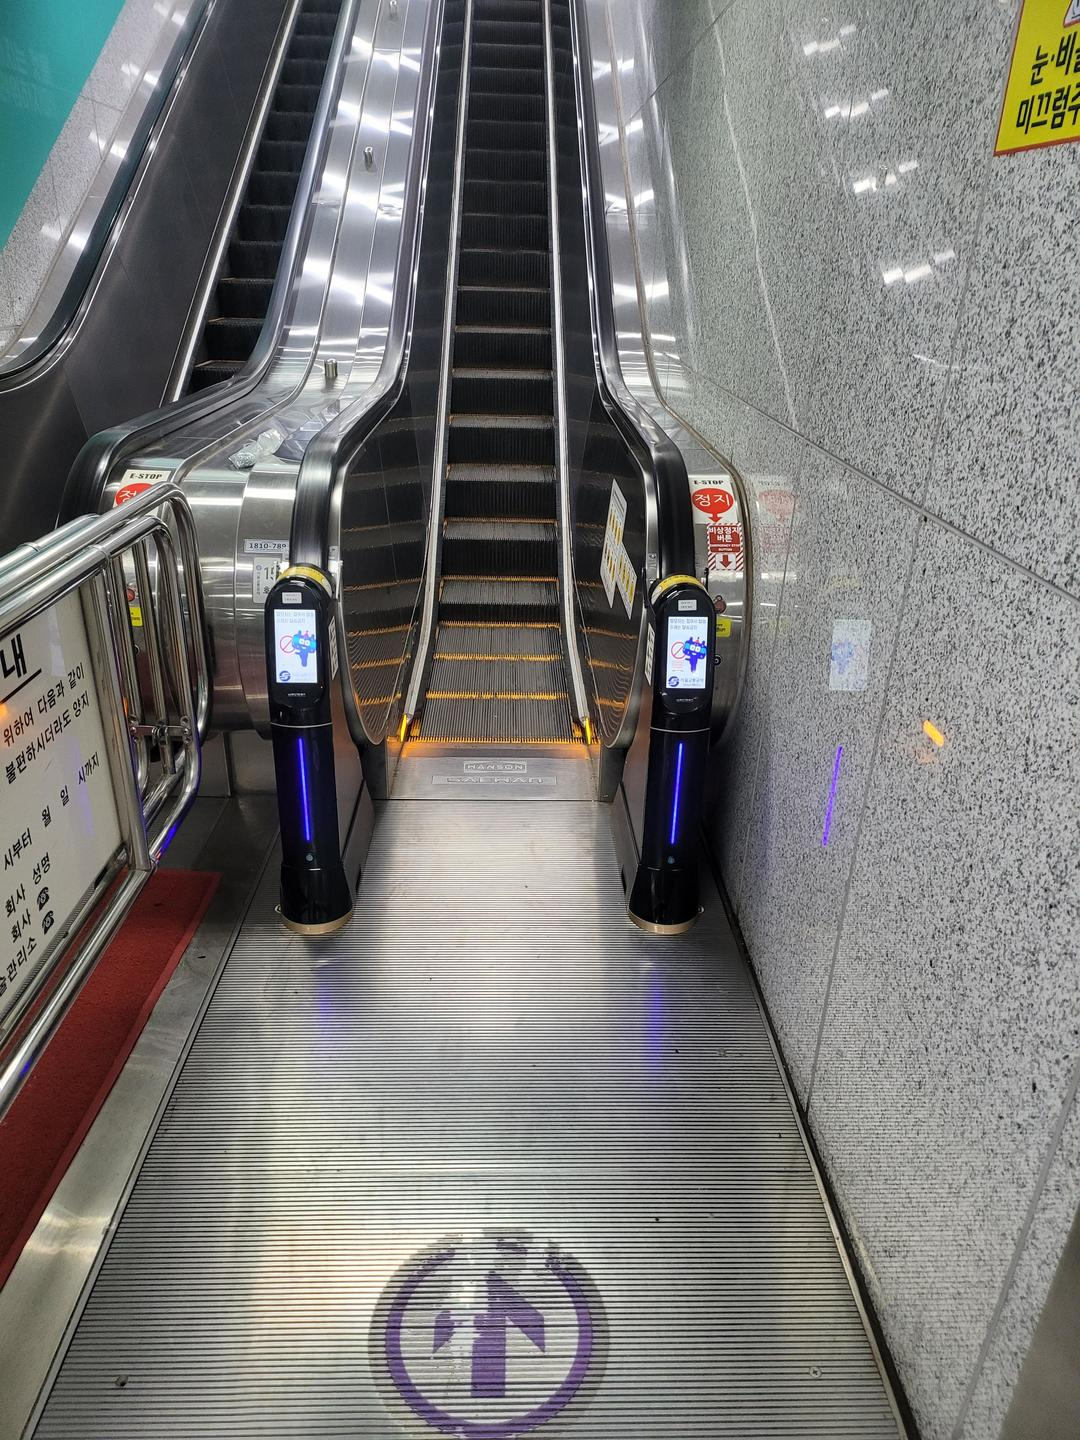 WeClean, an escalator handrail coronavirus sterilization cleaner installed at Seoul Metro, 3